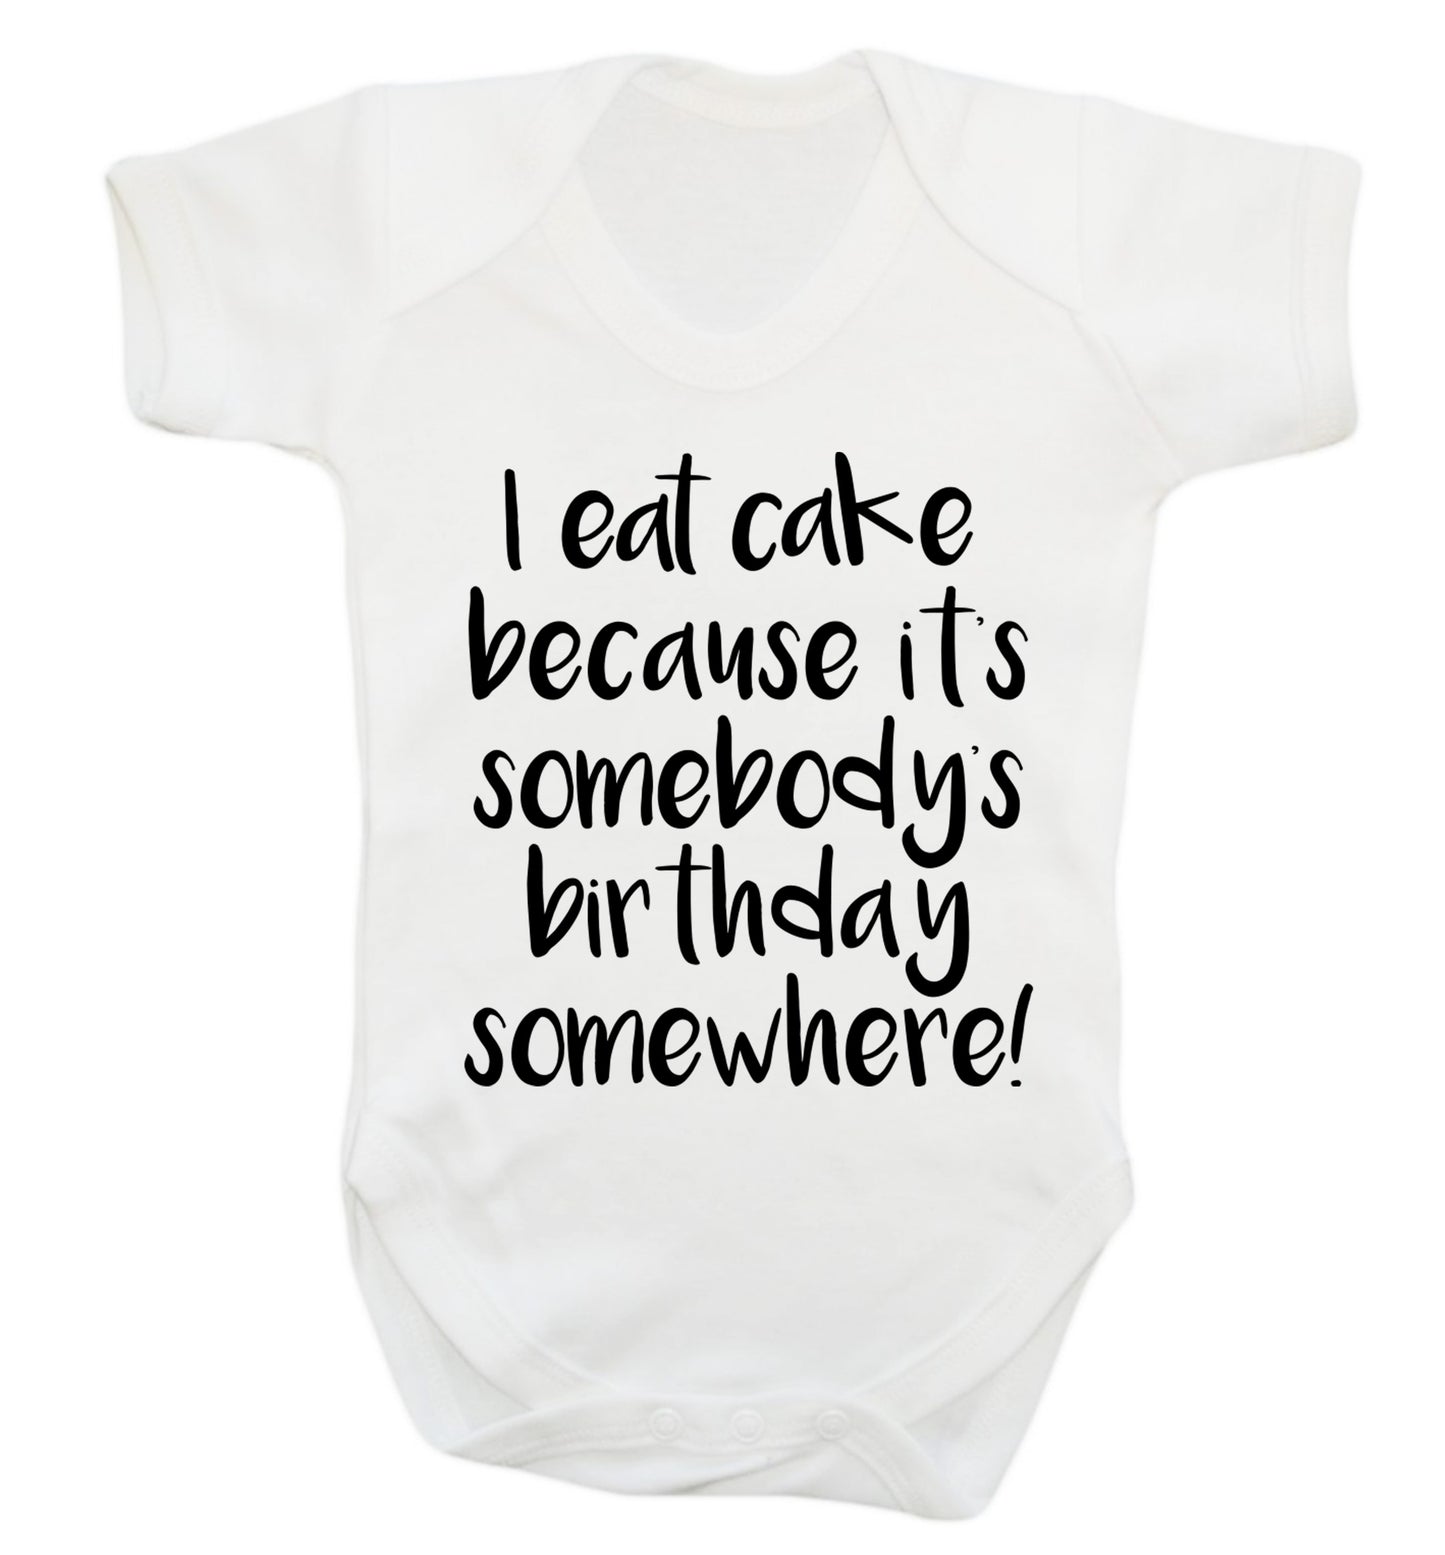 I eat cake because it's somebody's birthday somewhere! Baby Vest white 18-24 months